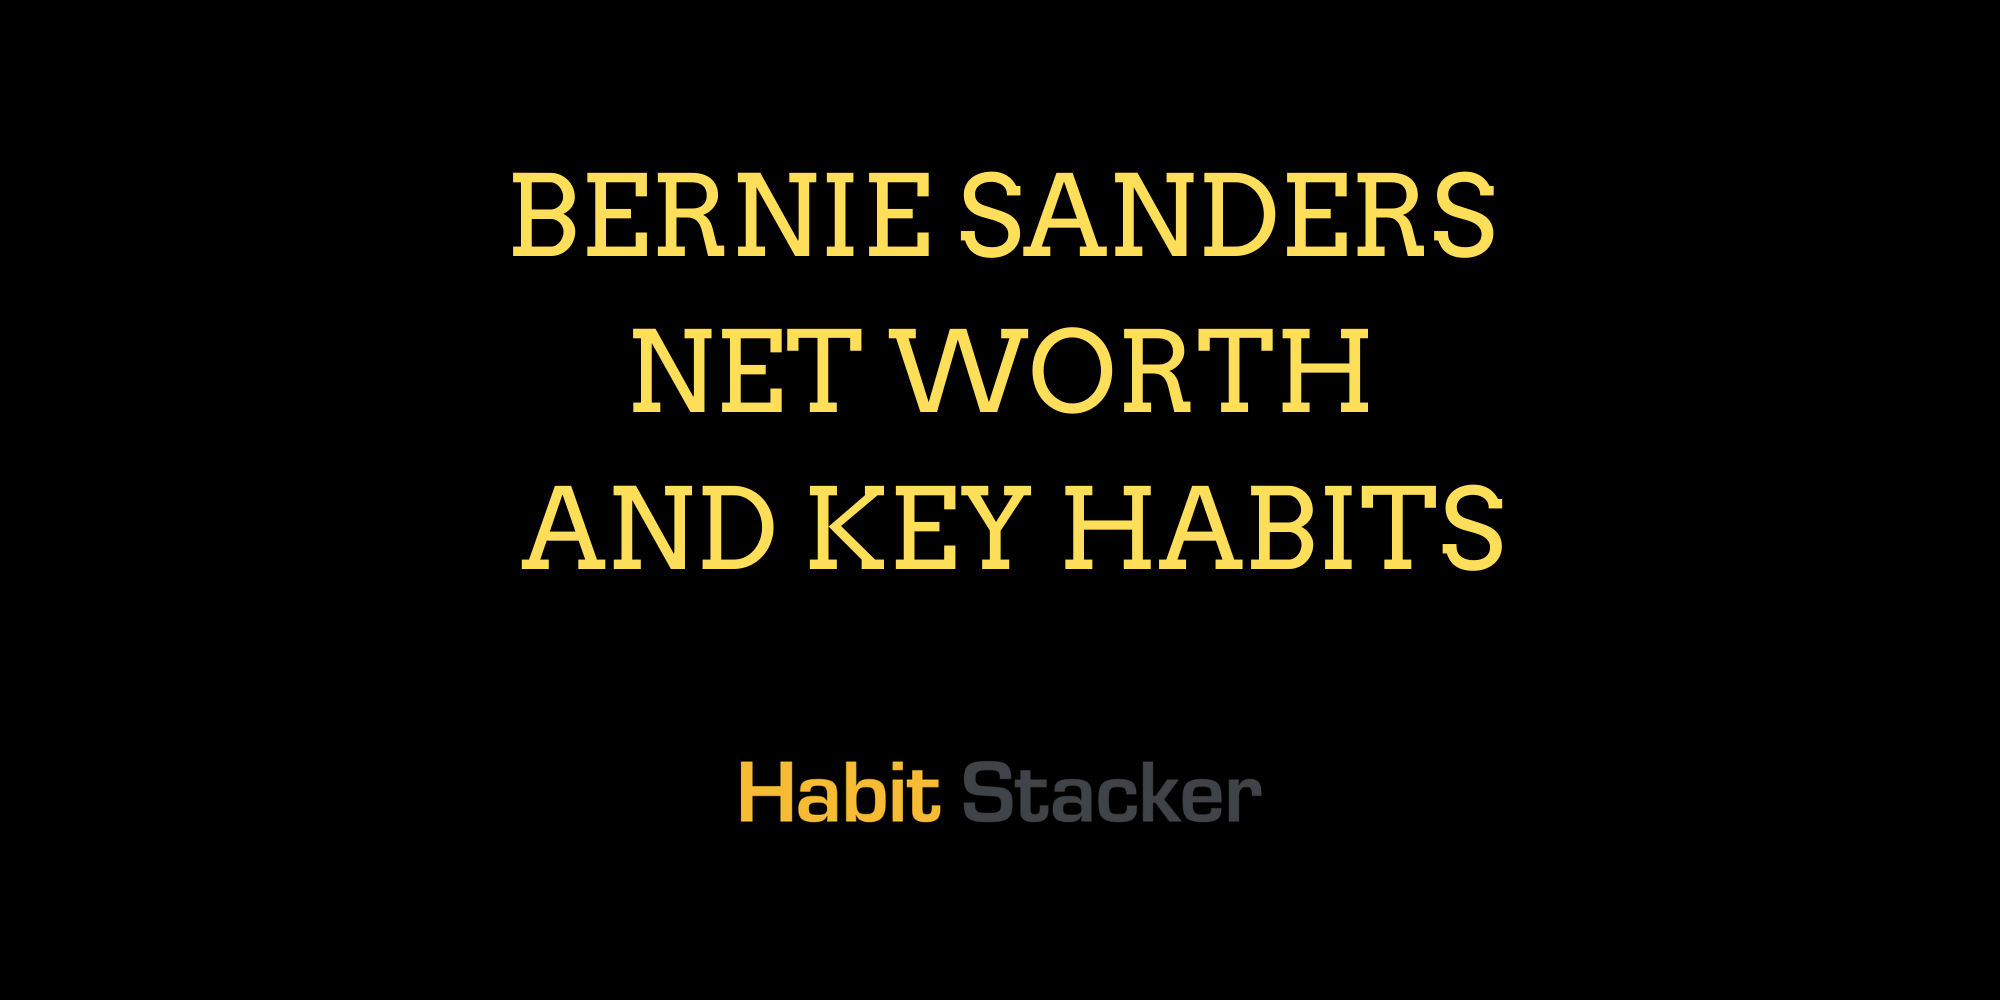 Bernie Sanders Net Worth and Key Habits